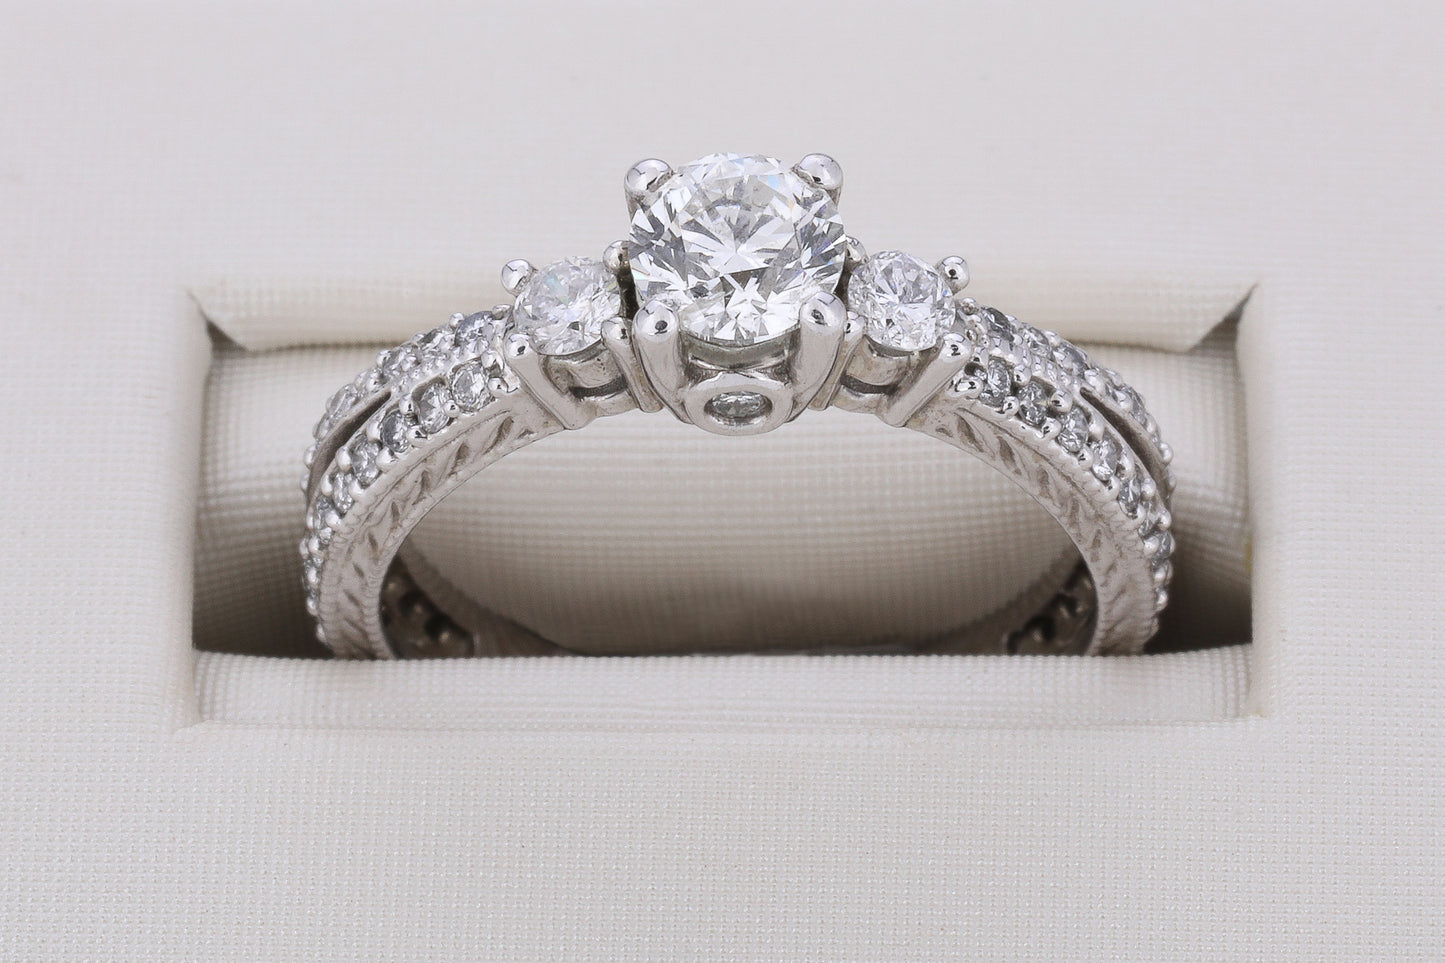 19k White Gold 0.94 ctw Diamond Engagement Ring